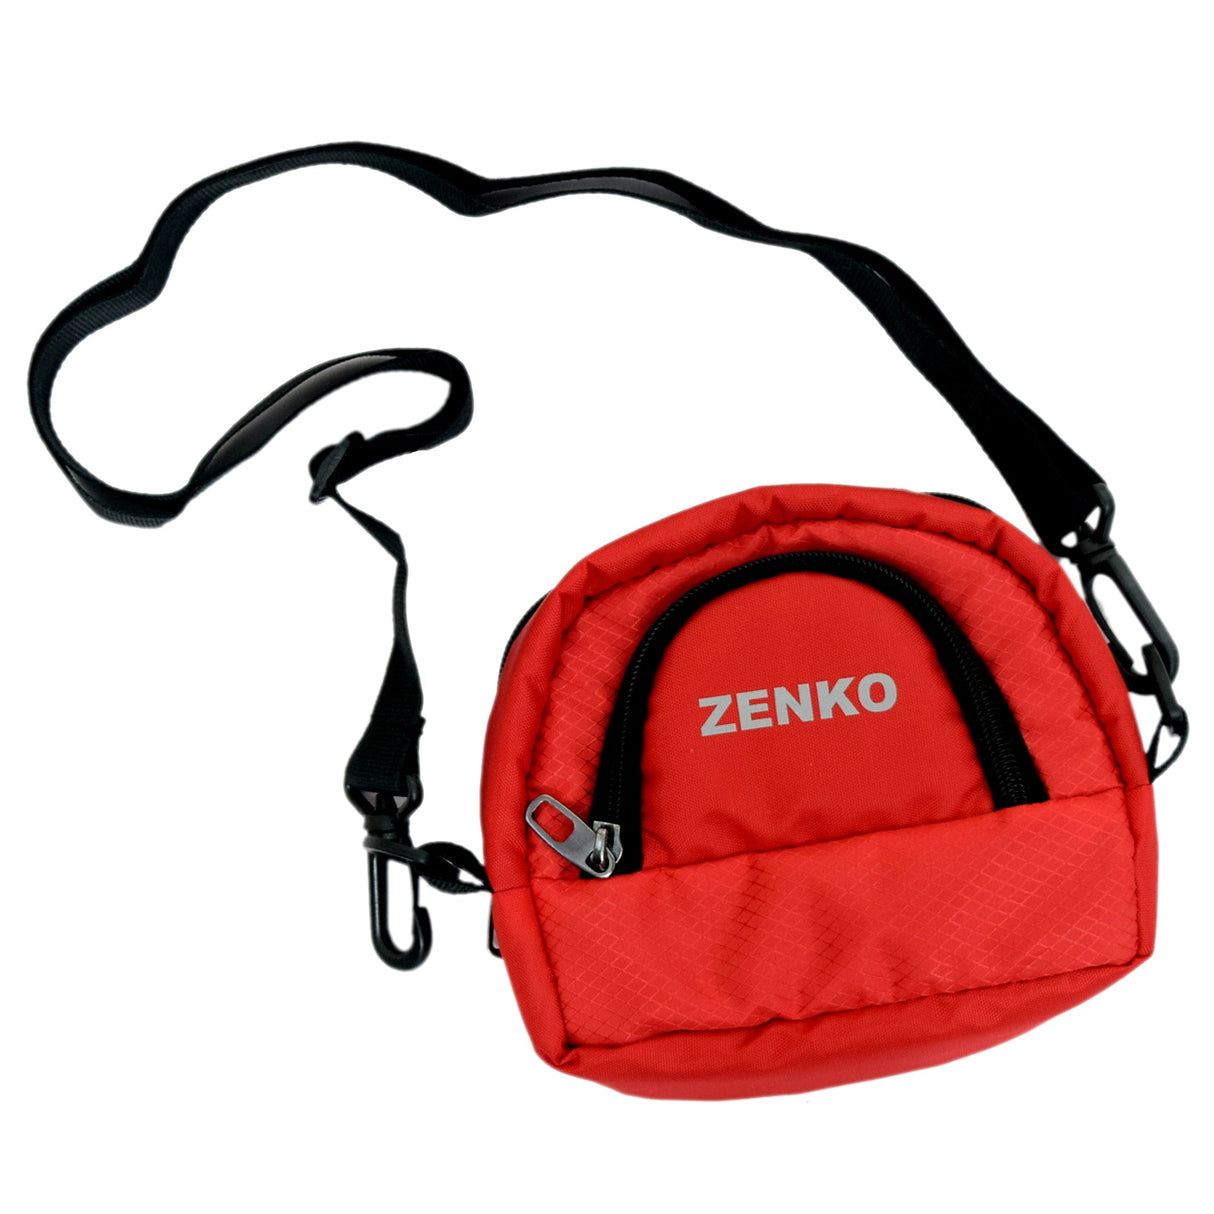 Zenko pouch for mini 7s instant camera bag Red